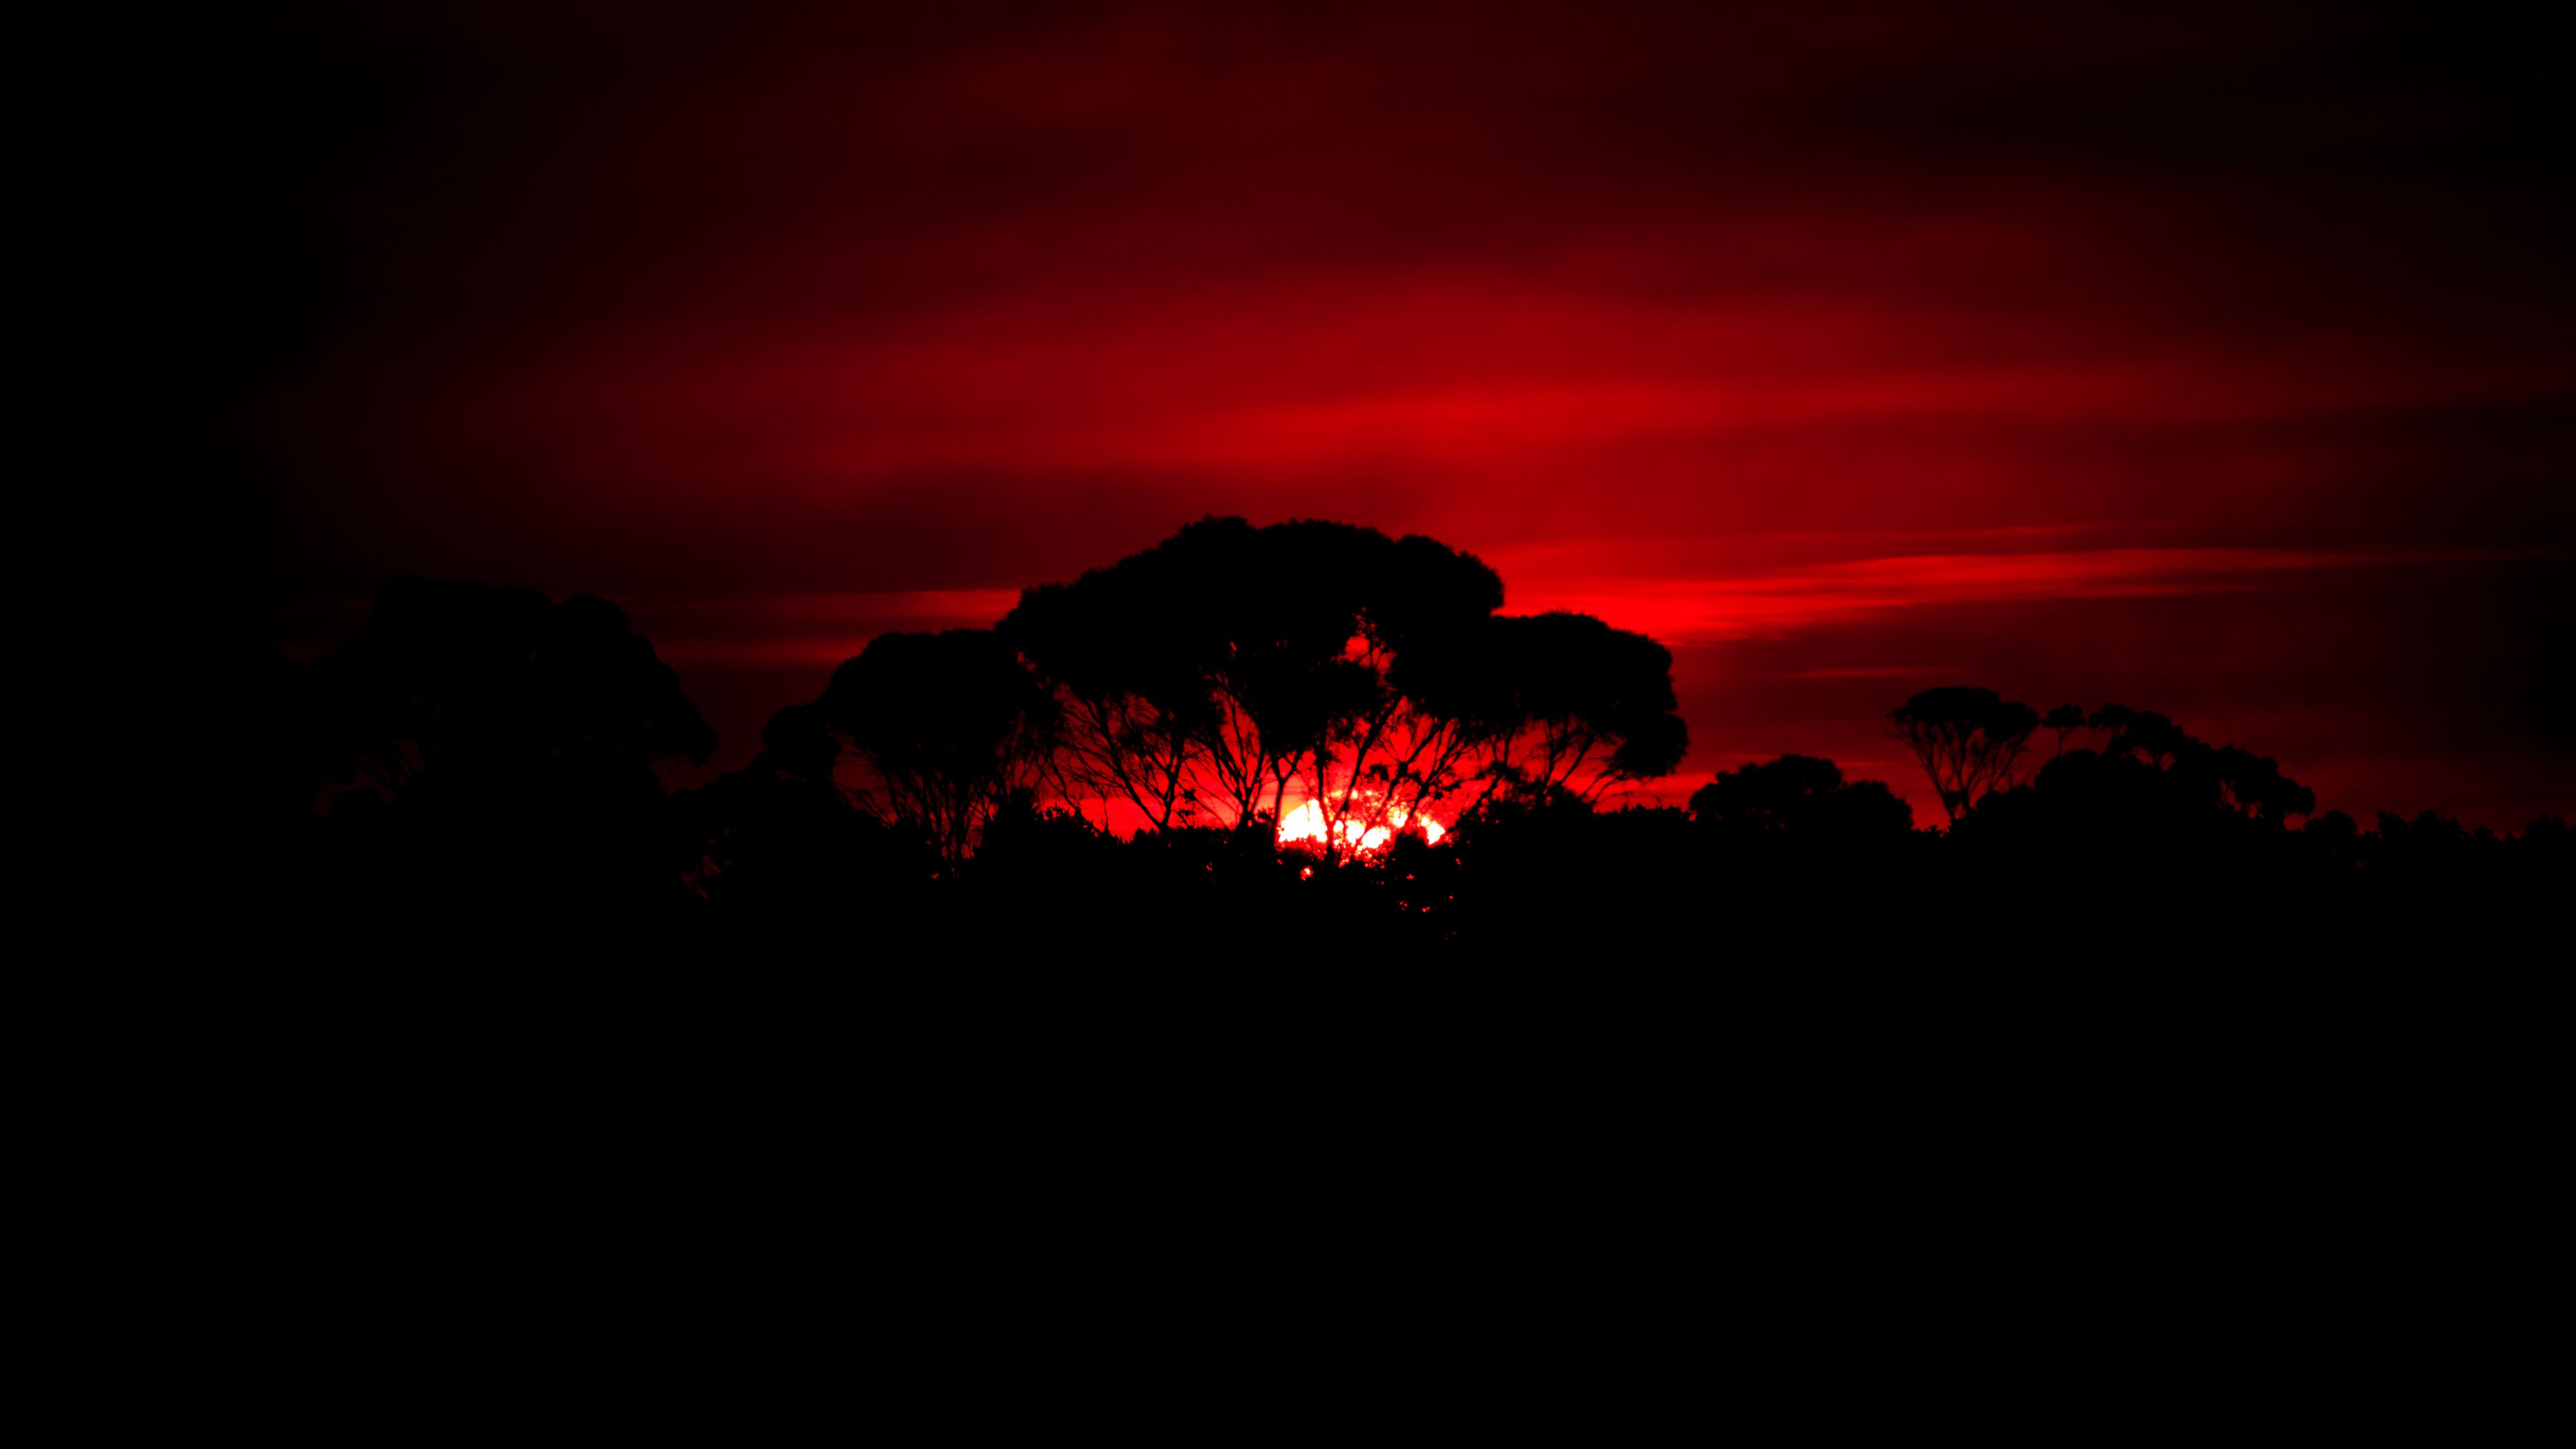 Download wallpaper 3840x2160 tree, silhouette, sunset, dark, nature 4k uhd 16:9 HD background